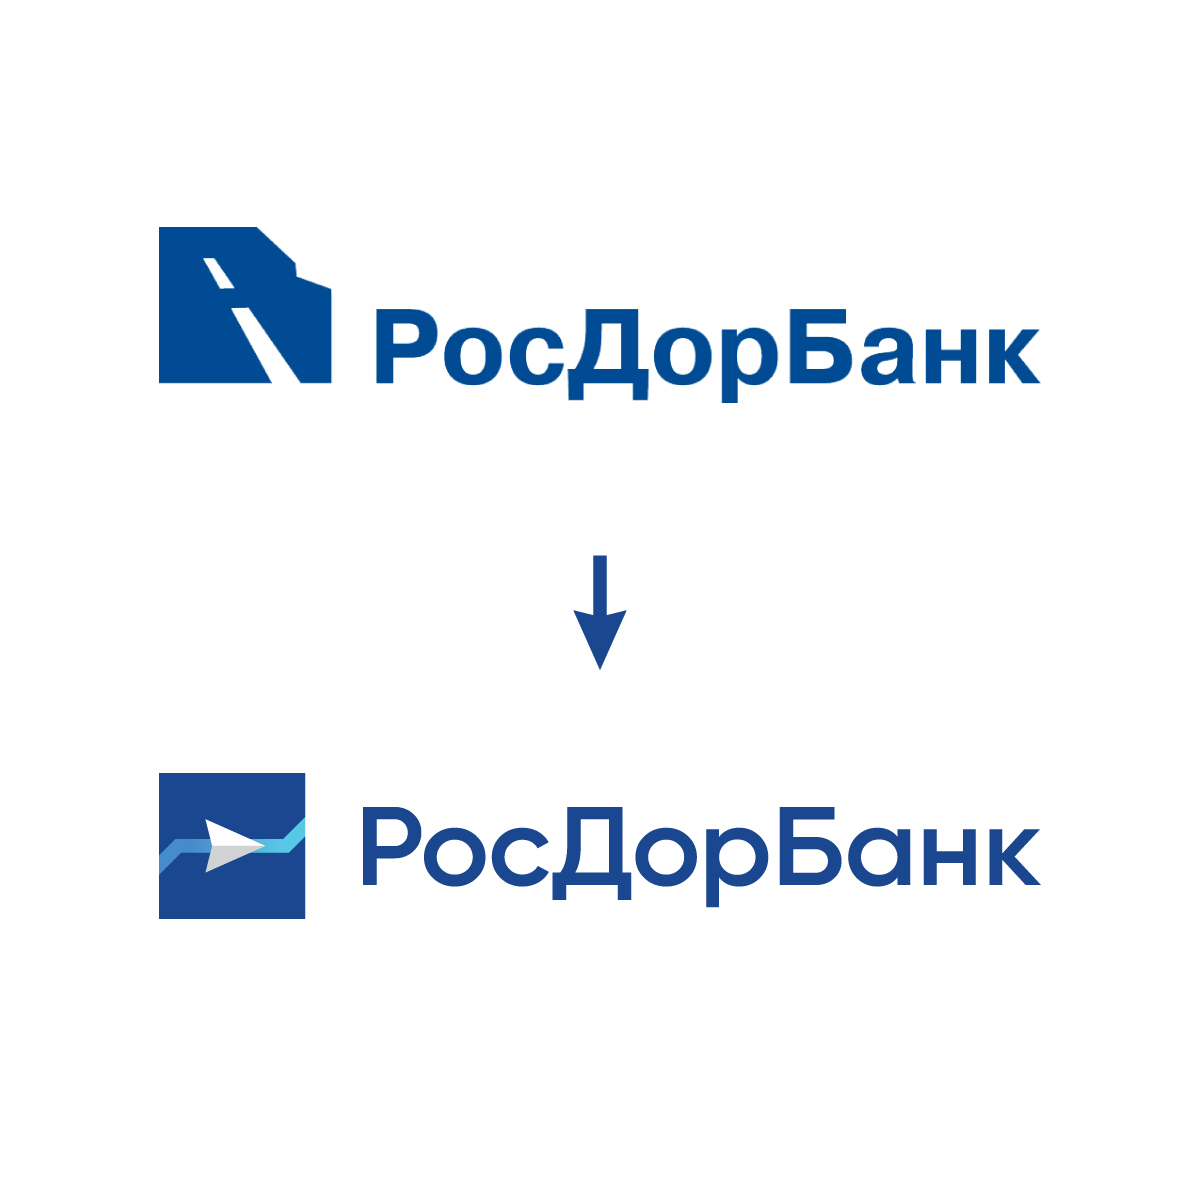 лого до и после